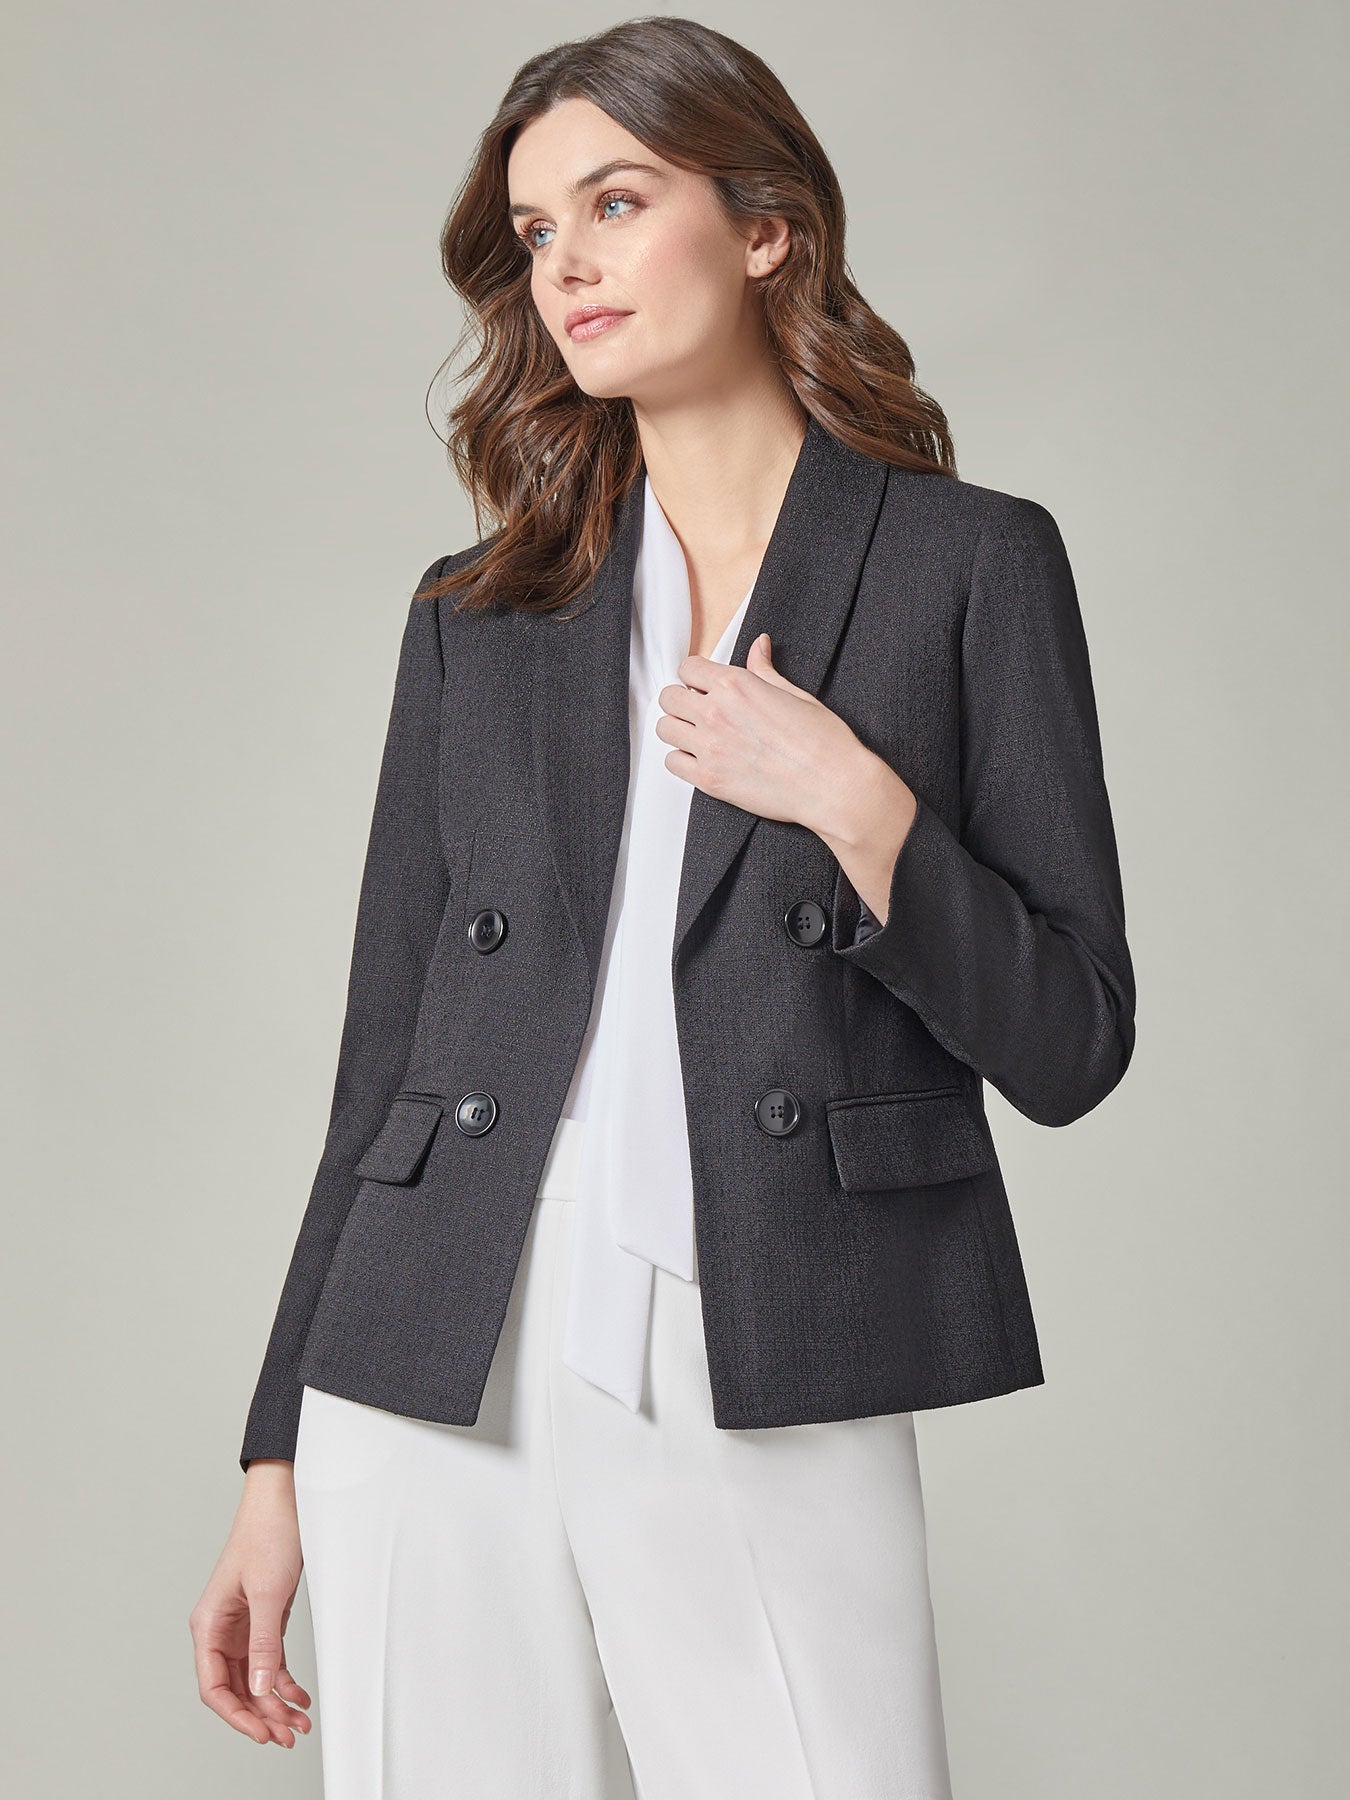 Women's Blazers - Business Casual Jacket